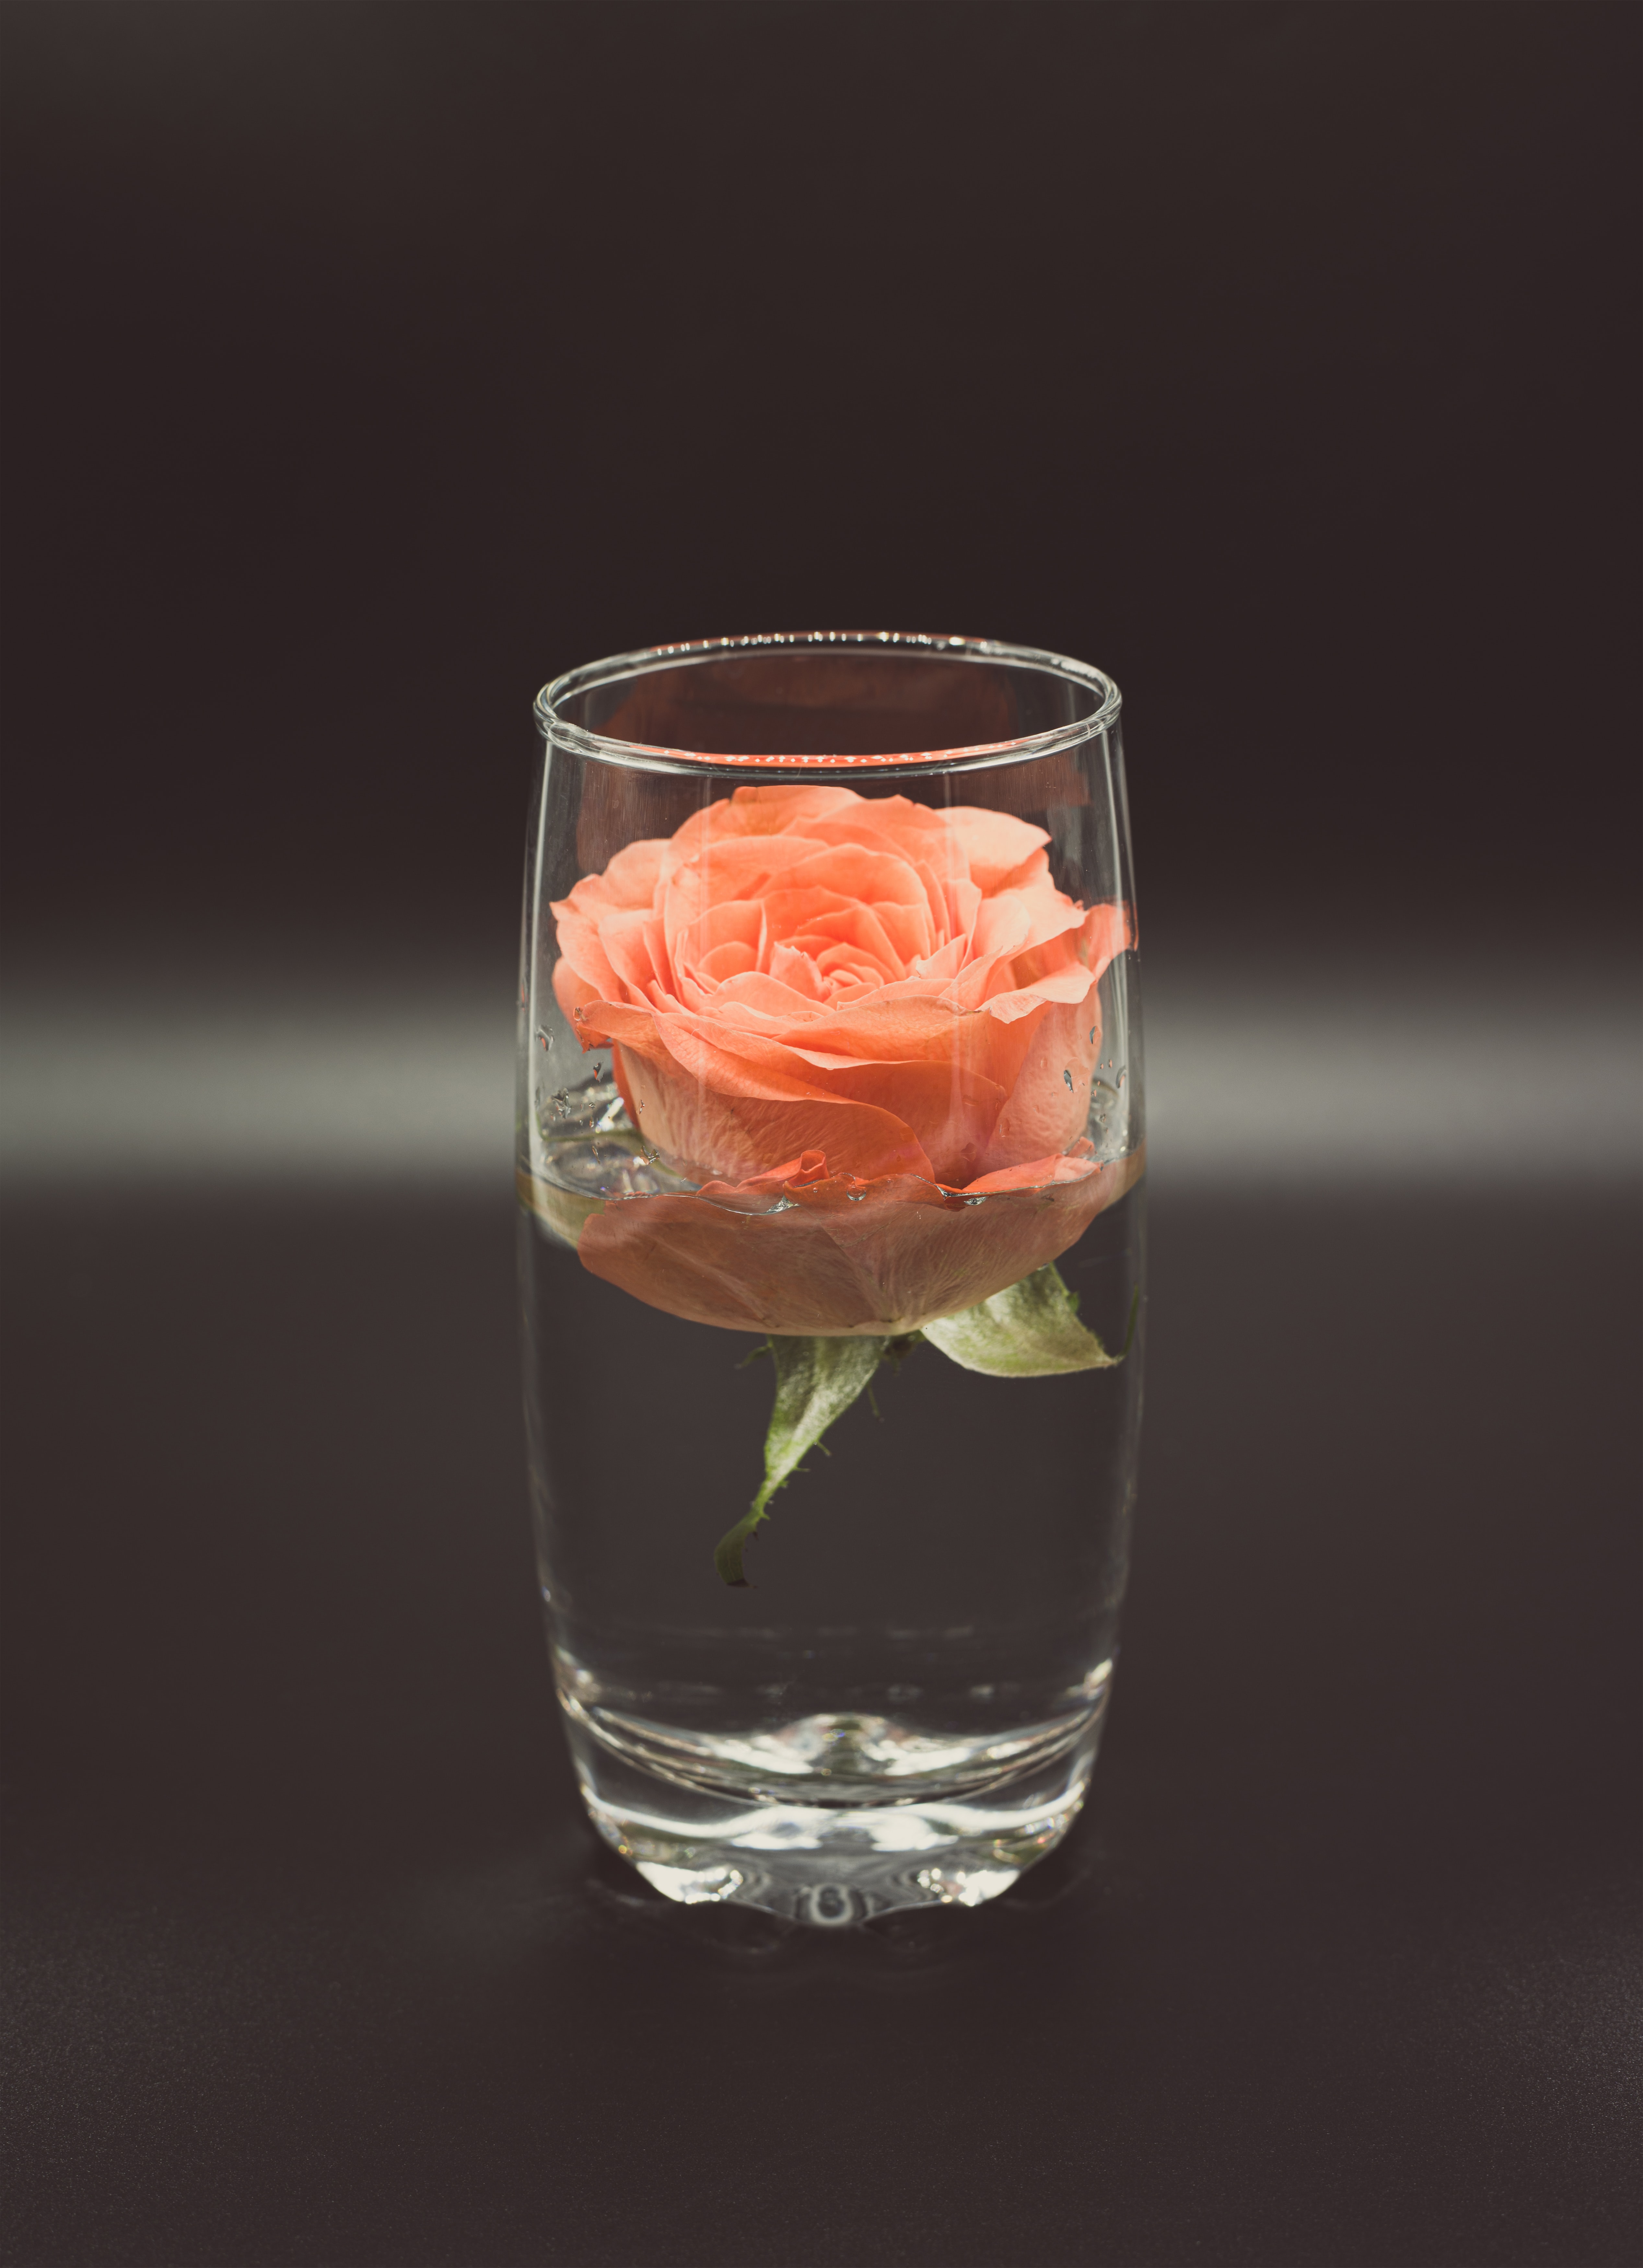 rose flower, flowers, water, flower, rose, glass